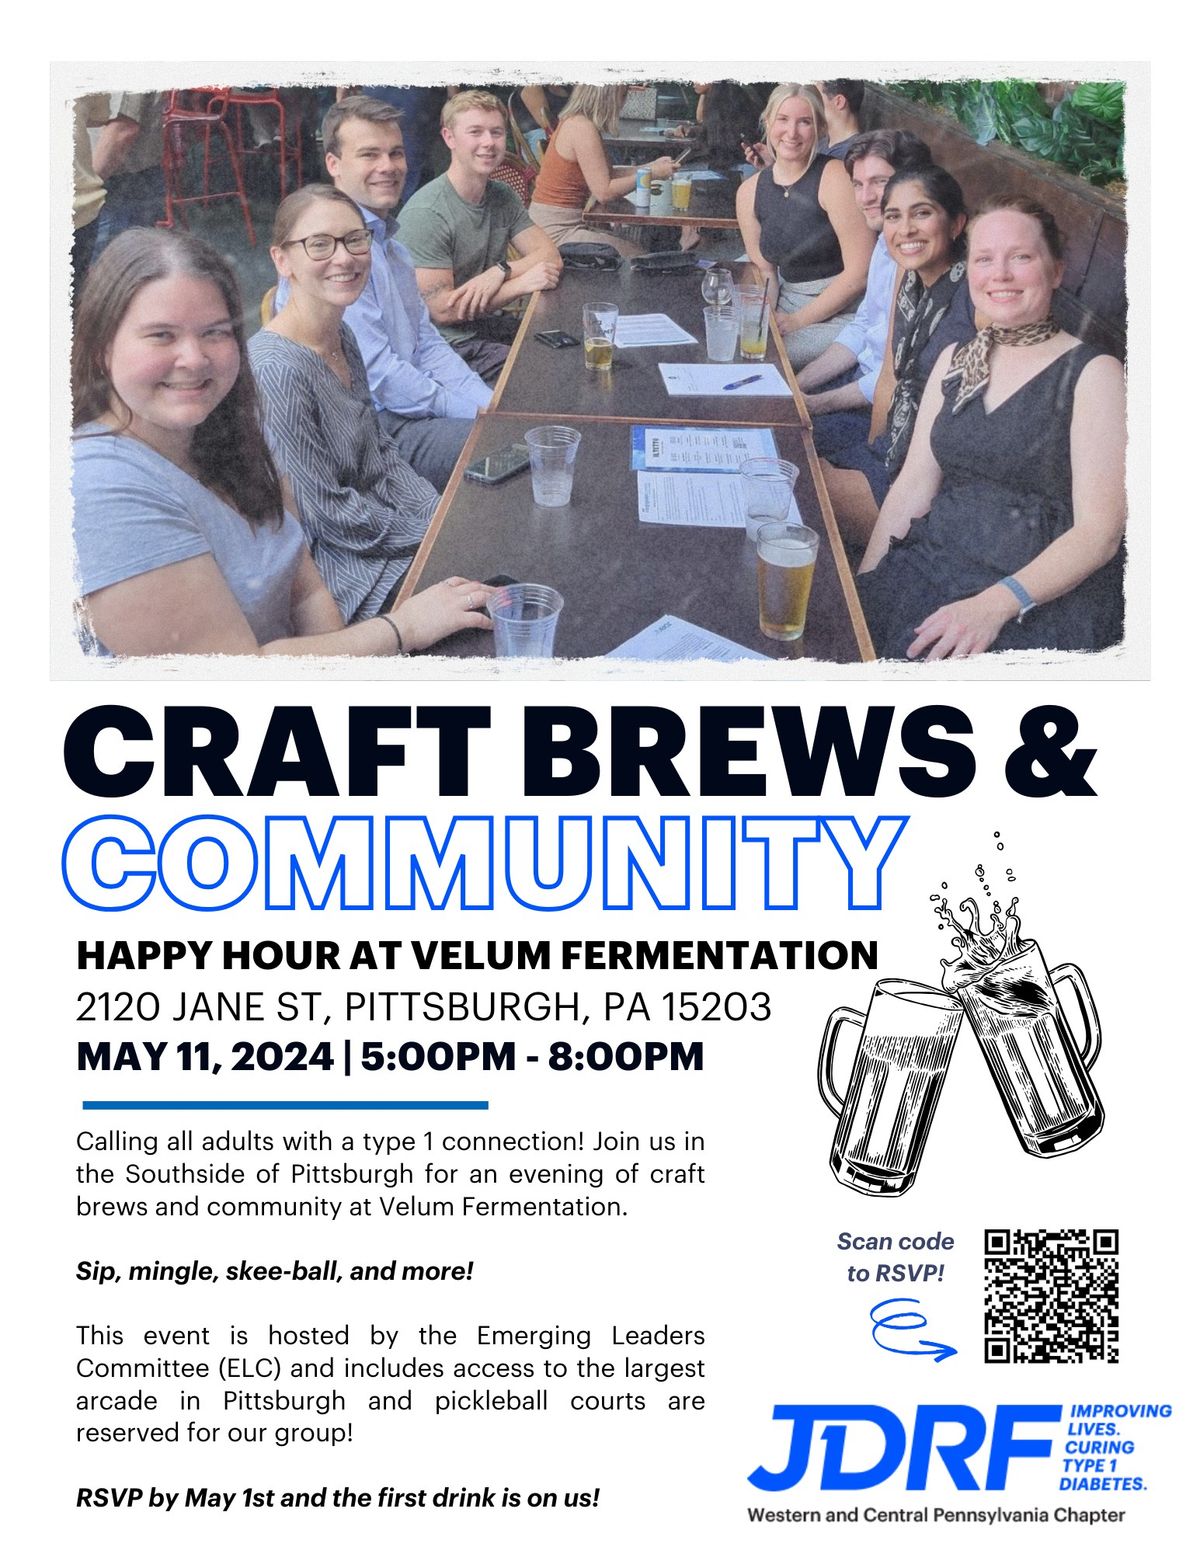 Craft Brews & Community - Happy Hour at Velum Fermentation